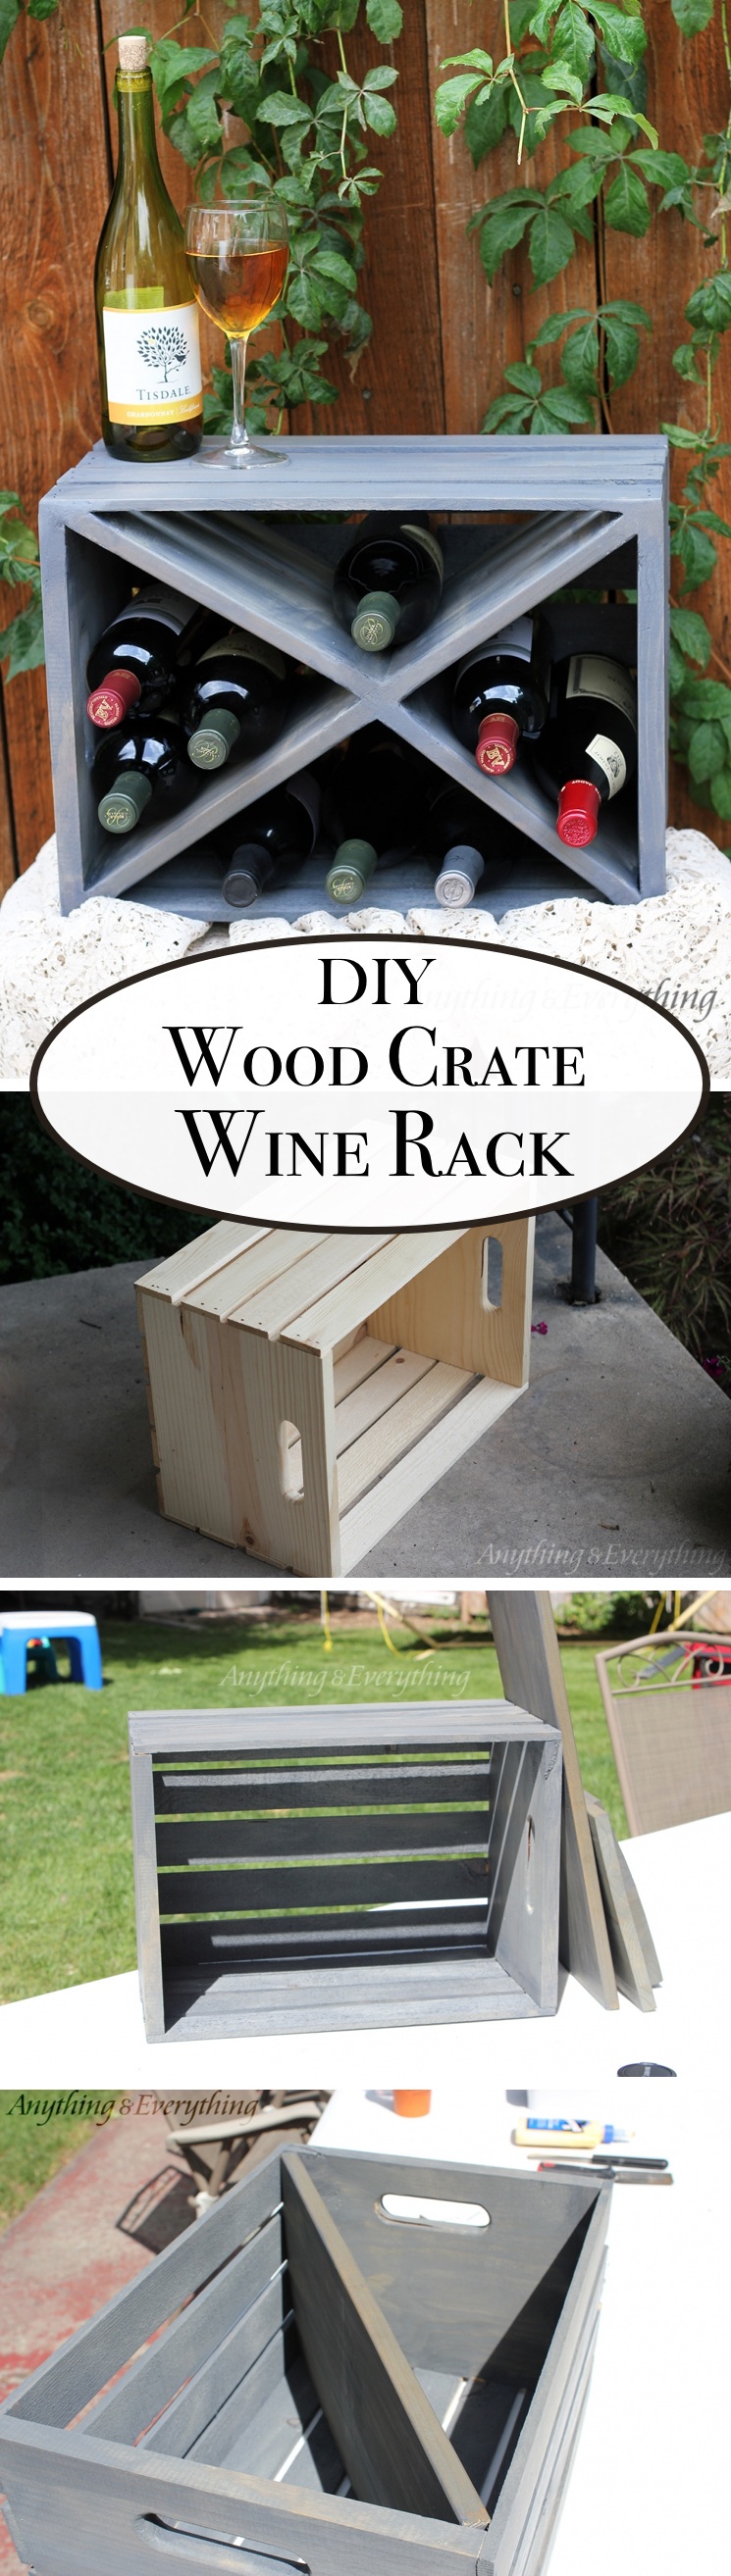 Wood Crate Wine Rack